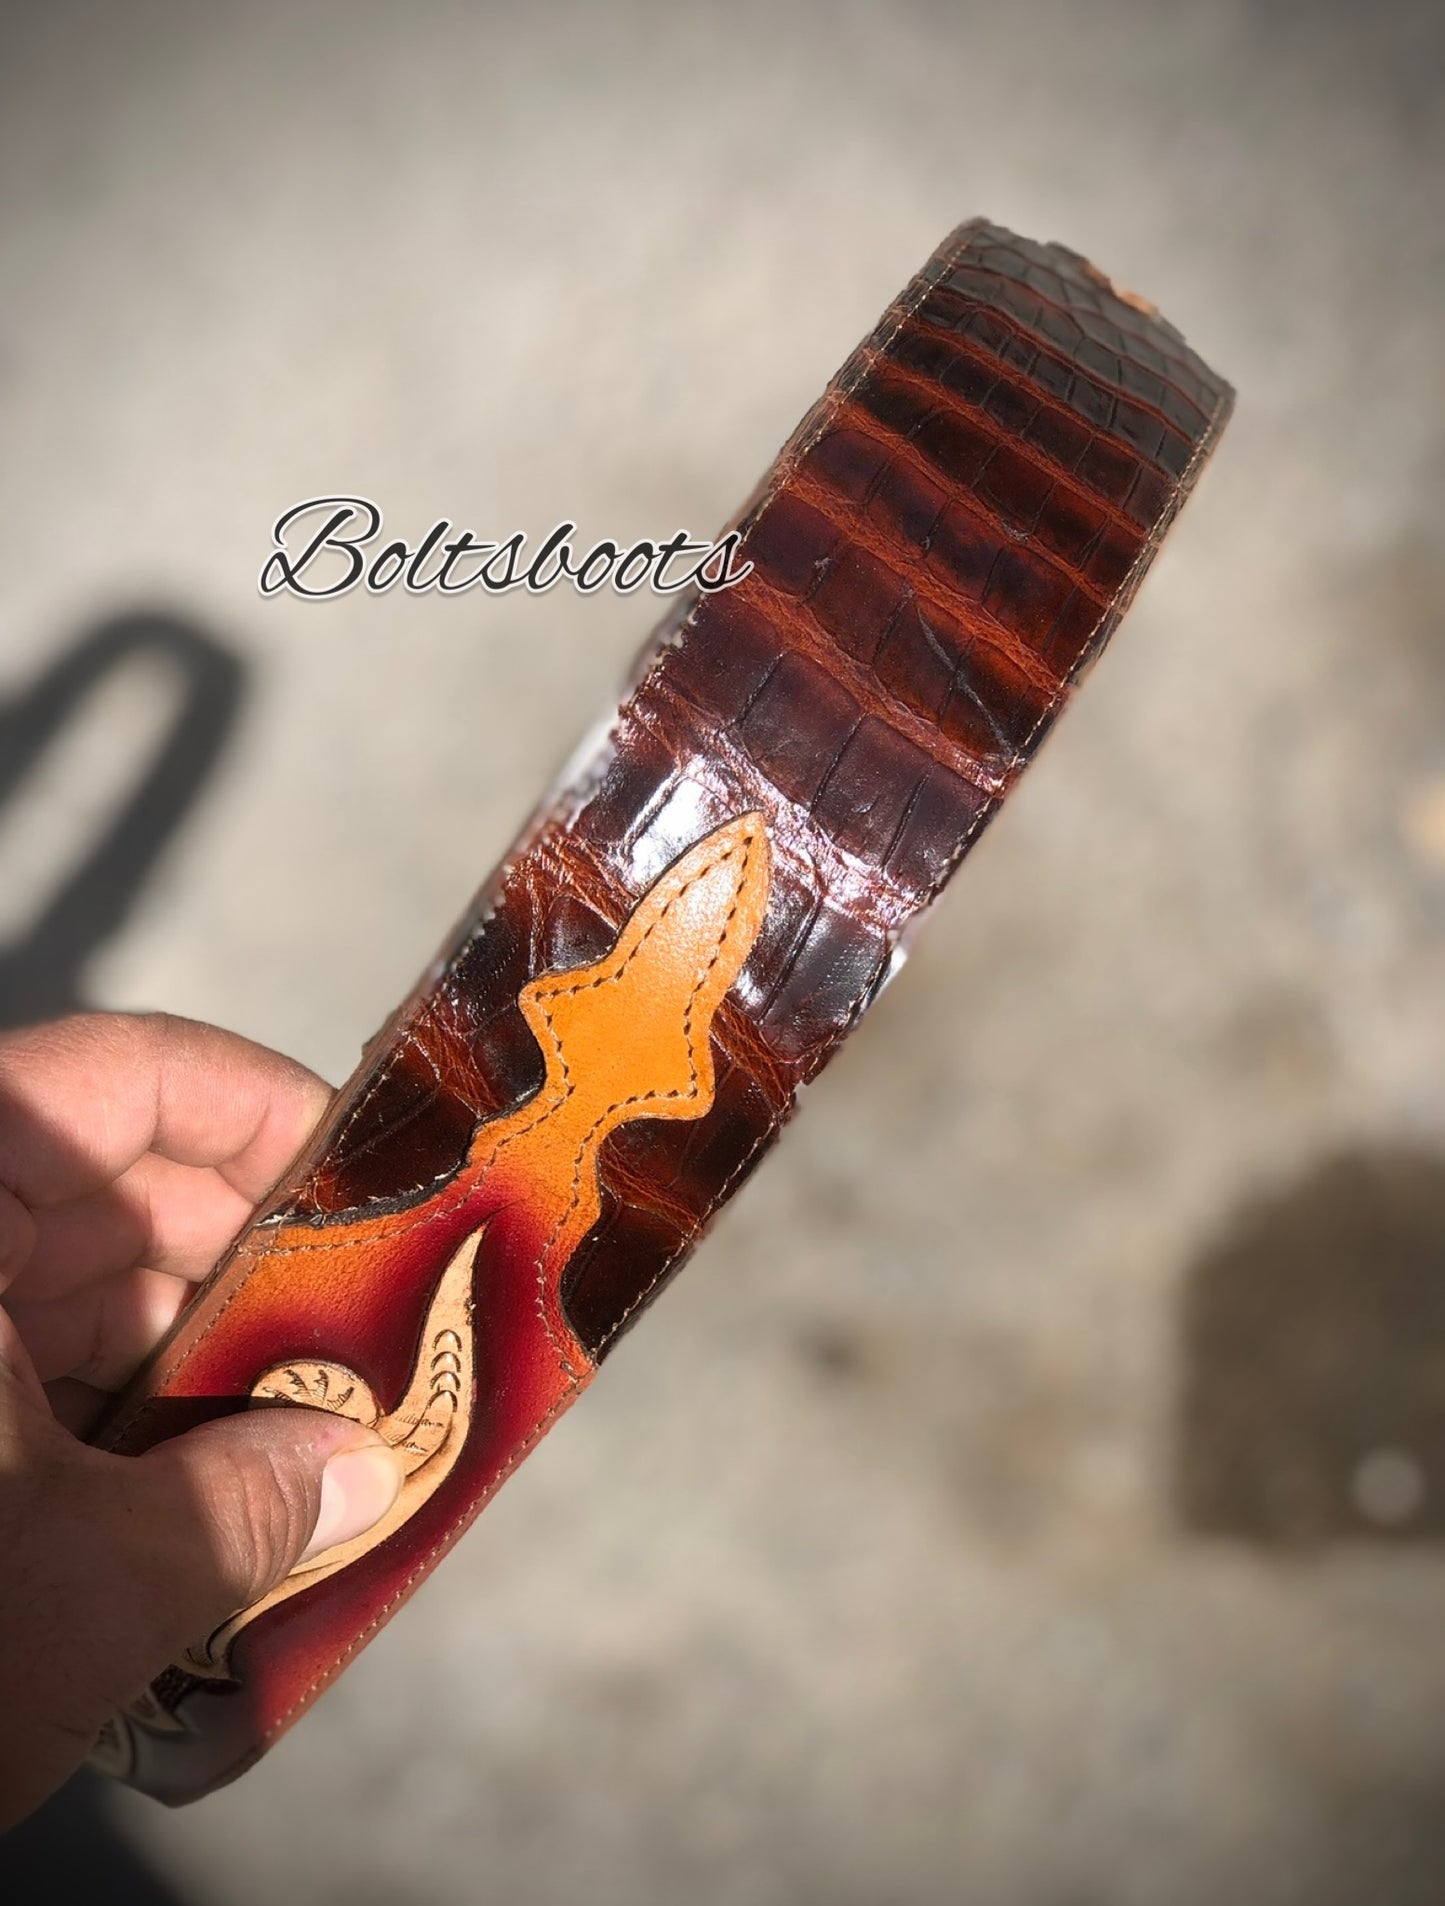 Handtooled BP belt by Boltsbootsbrand